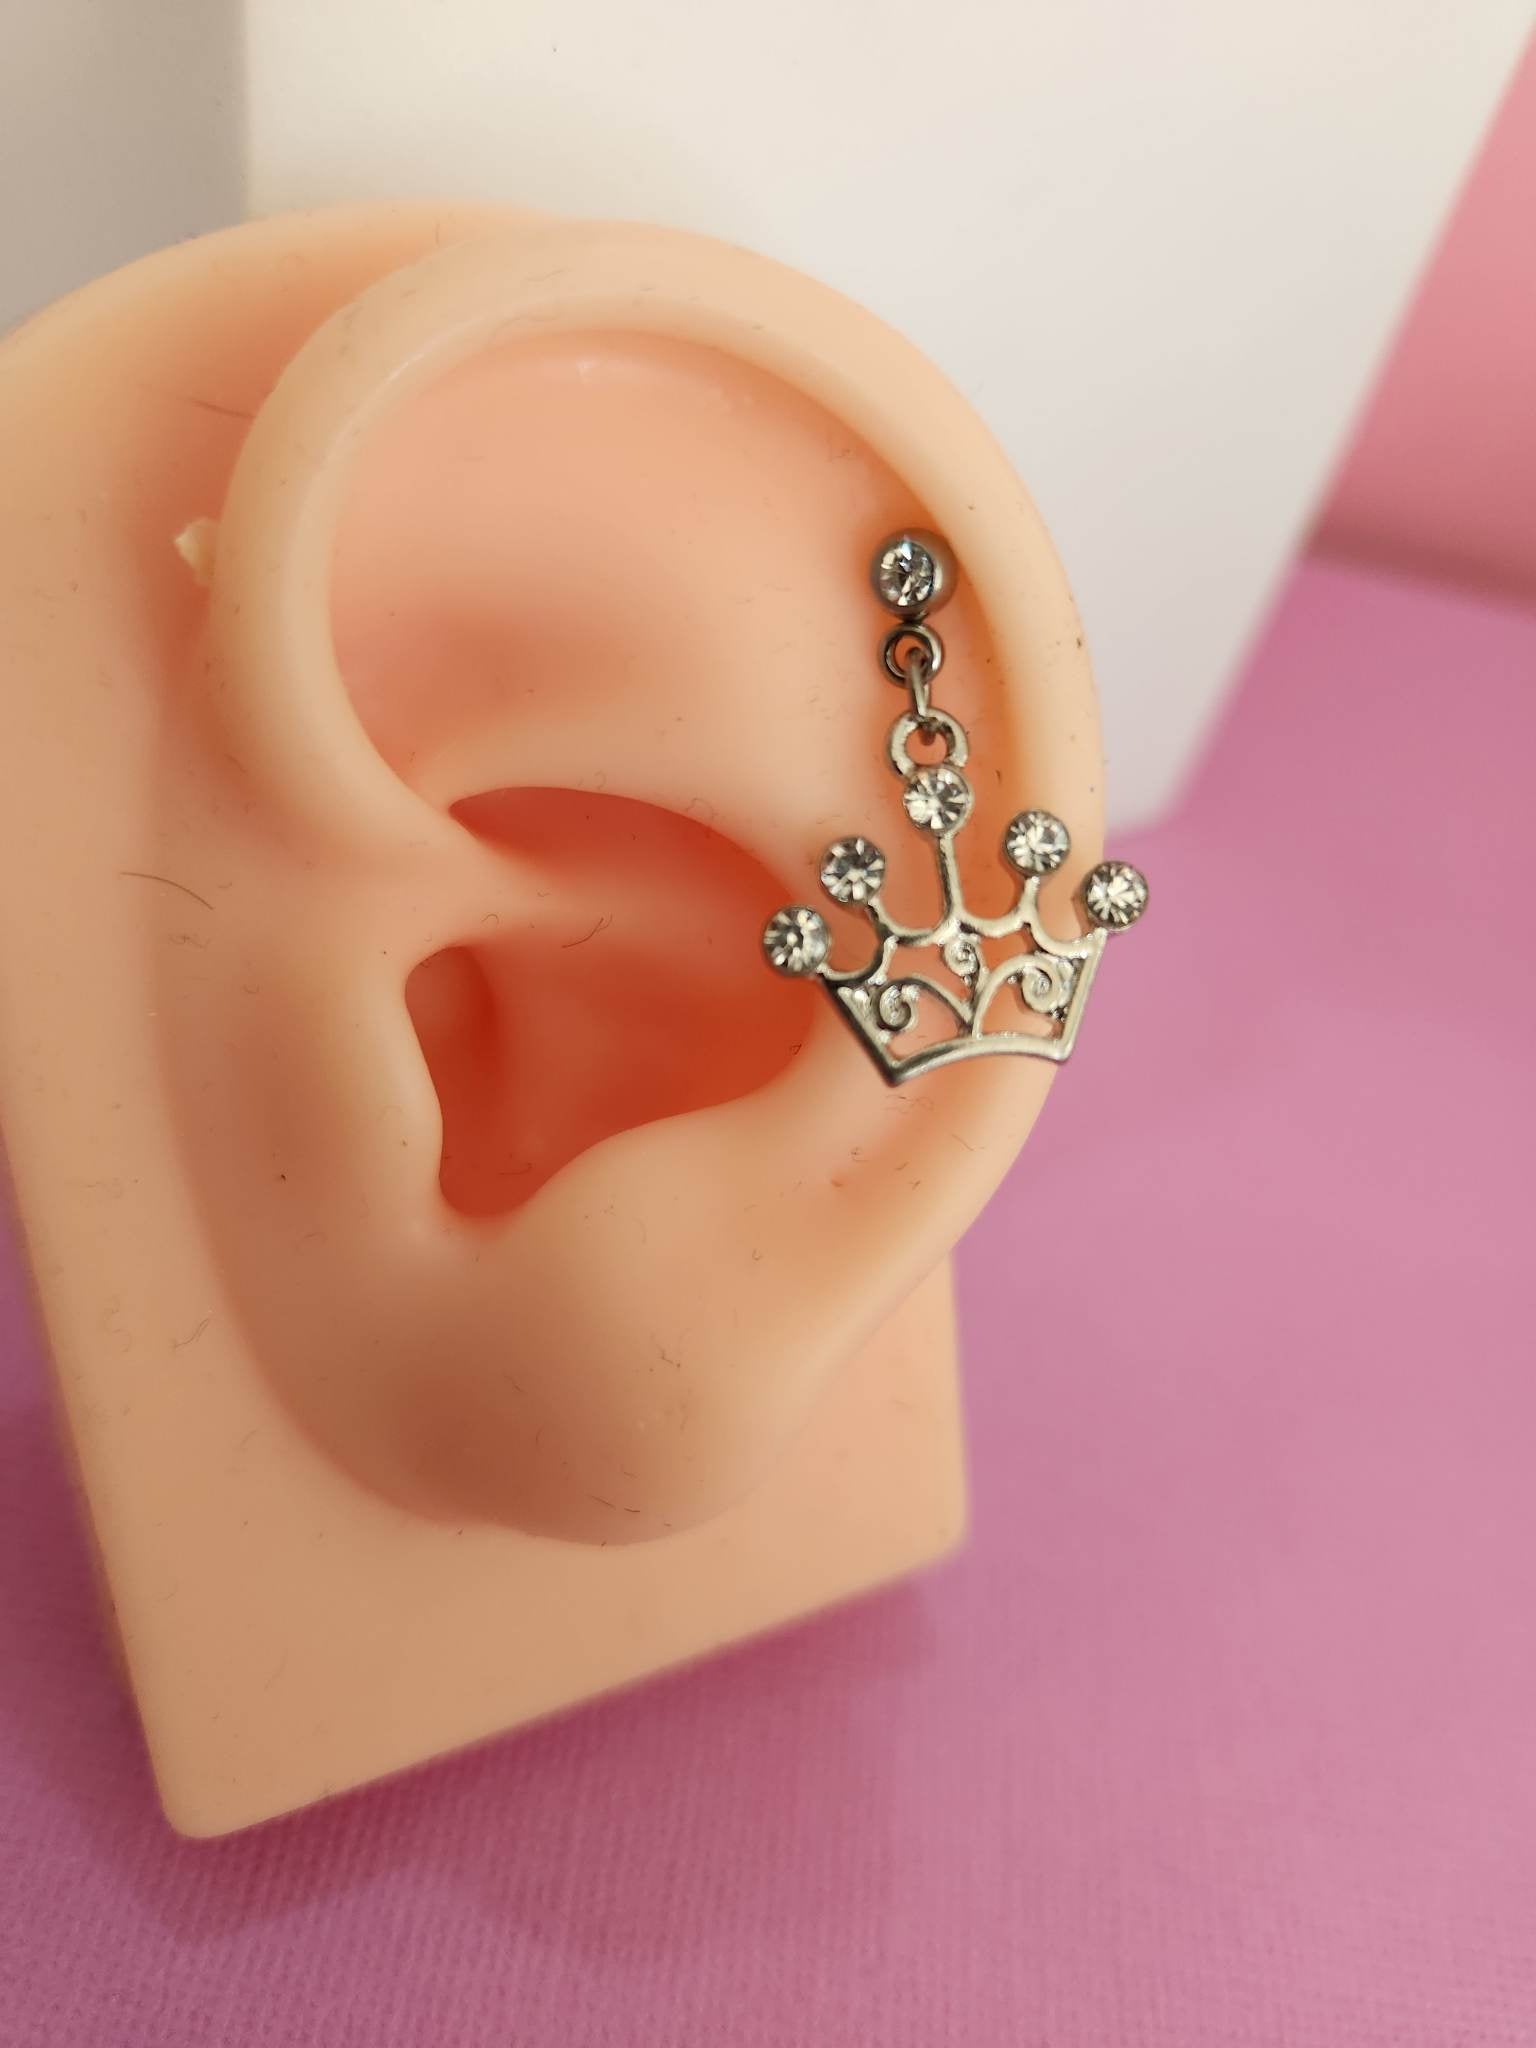 Gem Dangle Crown Ear Piercing Tragus Cartilage Flat Rook Earrings - Pierced n Proud